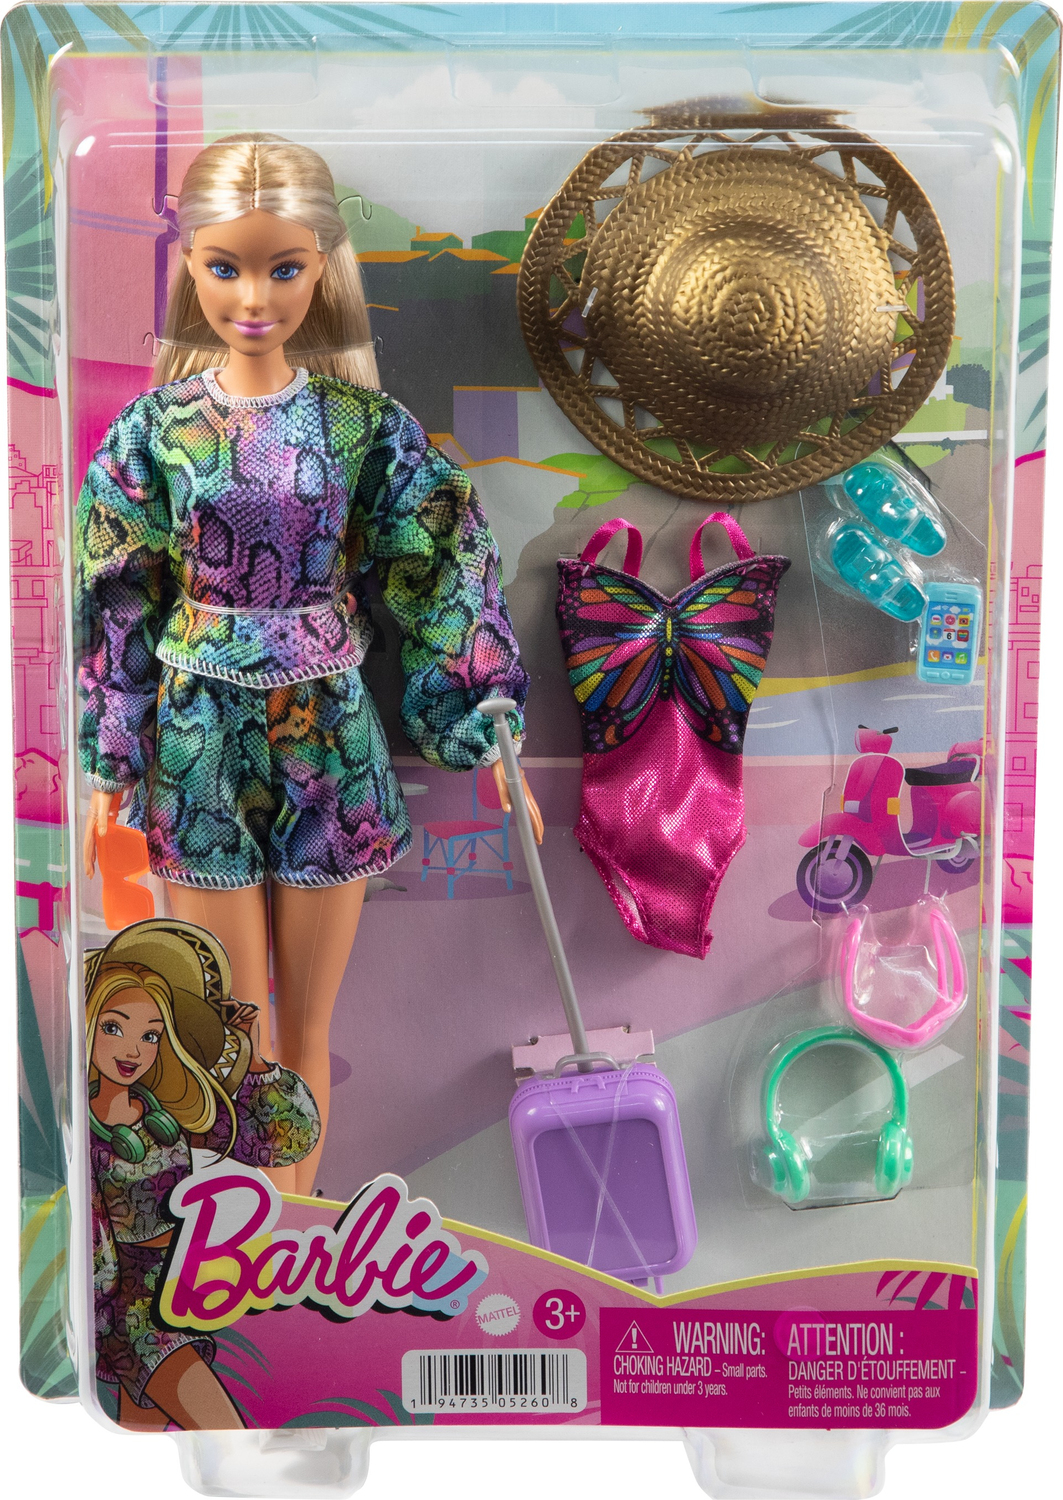 Barbie Summer Vacation